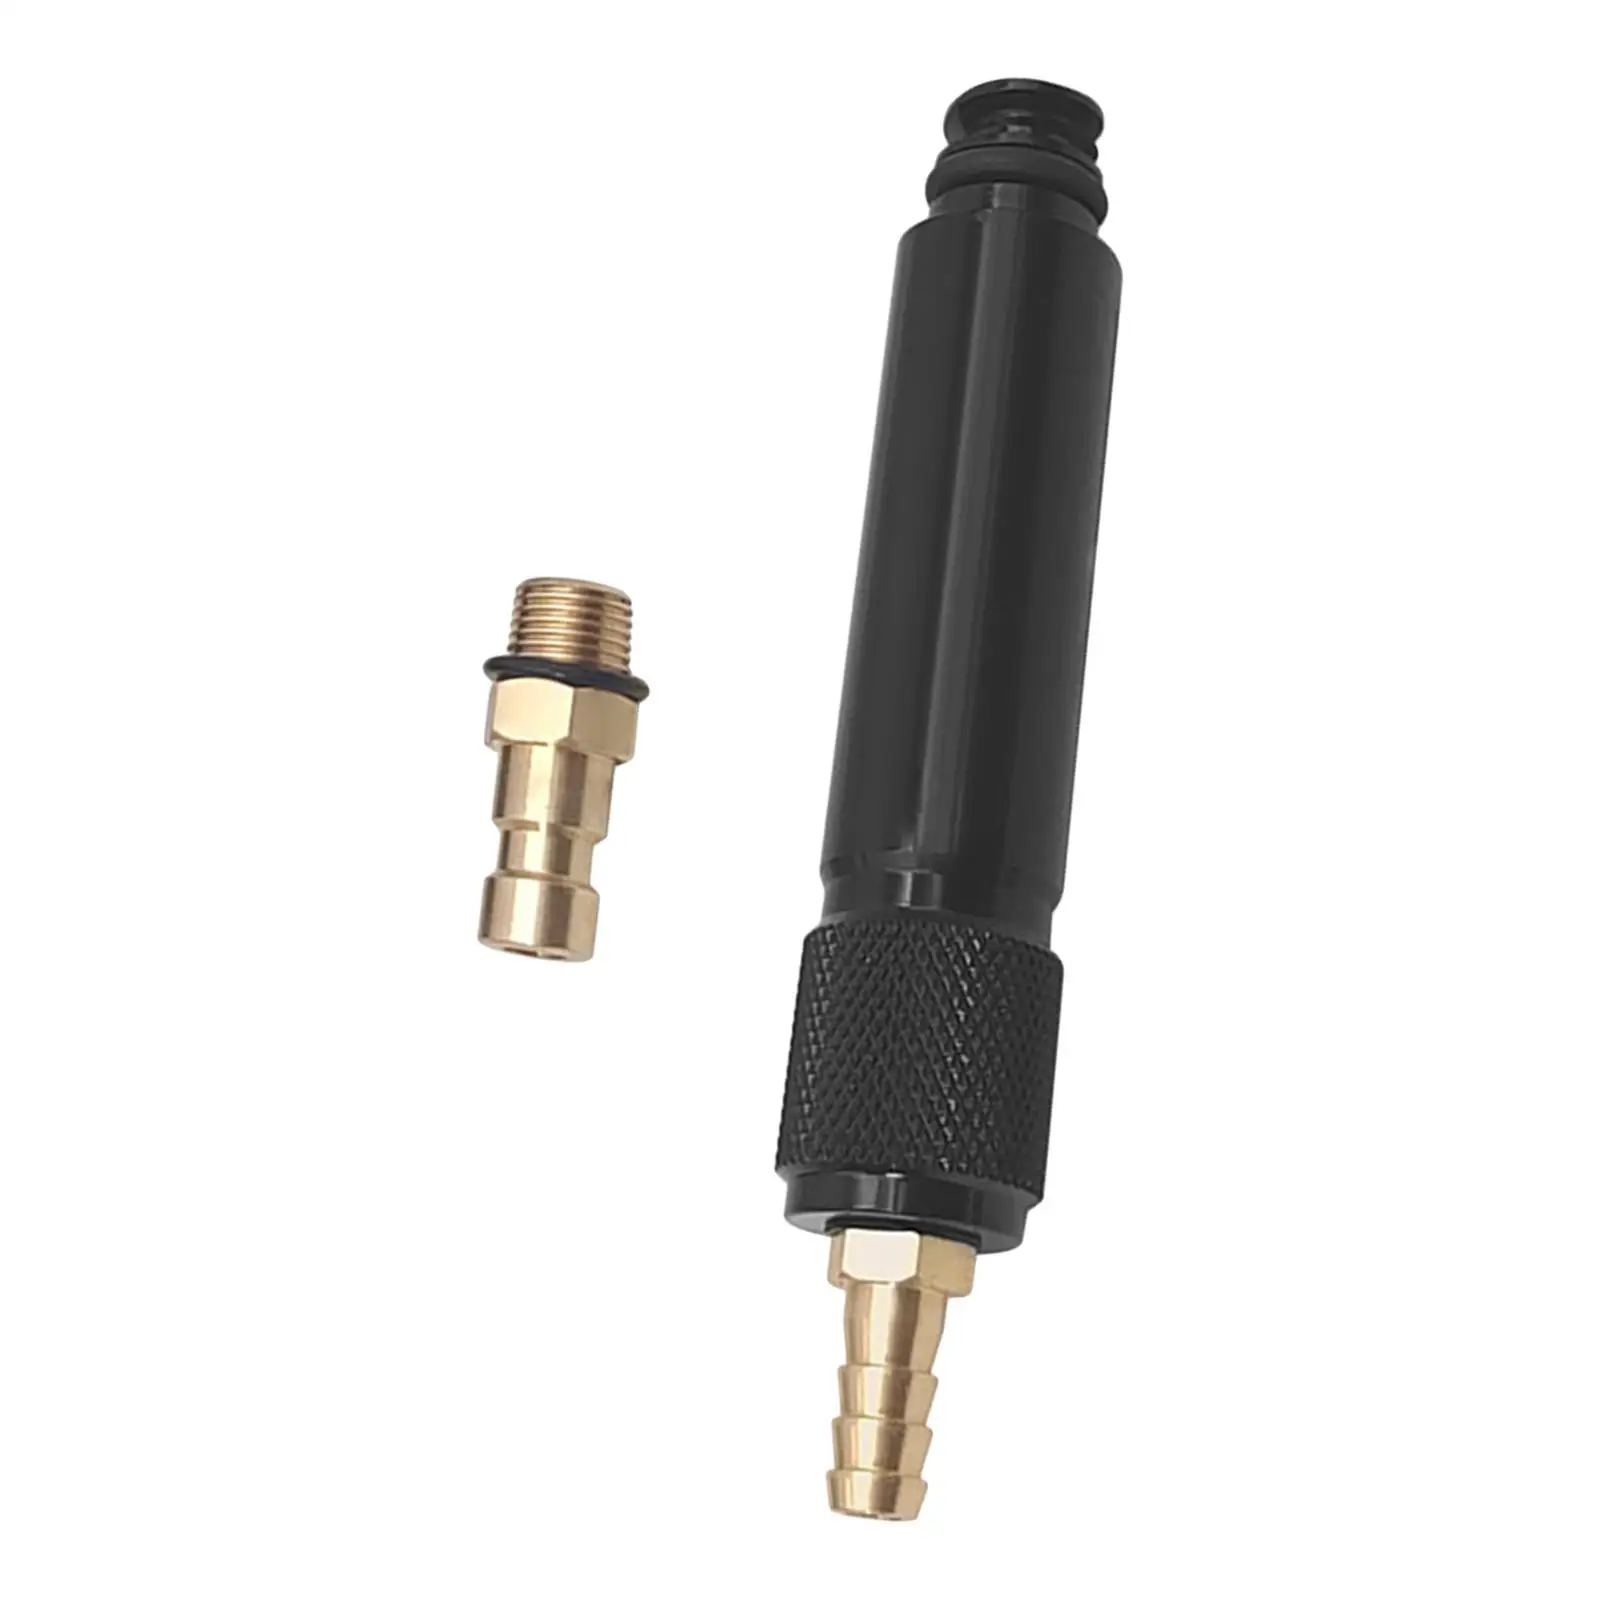 Transmition Oil Filling Adapter Vas6617/12 Supplies Spare Parts